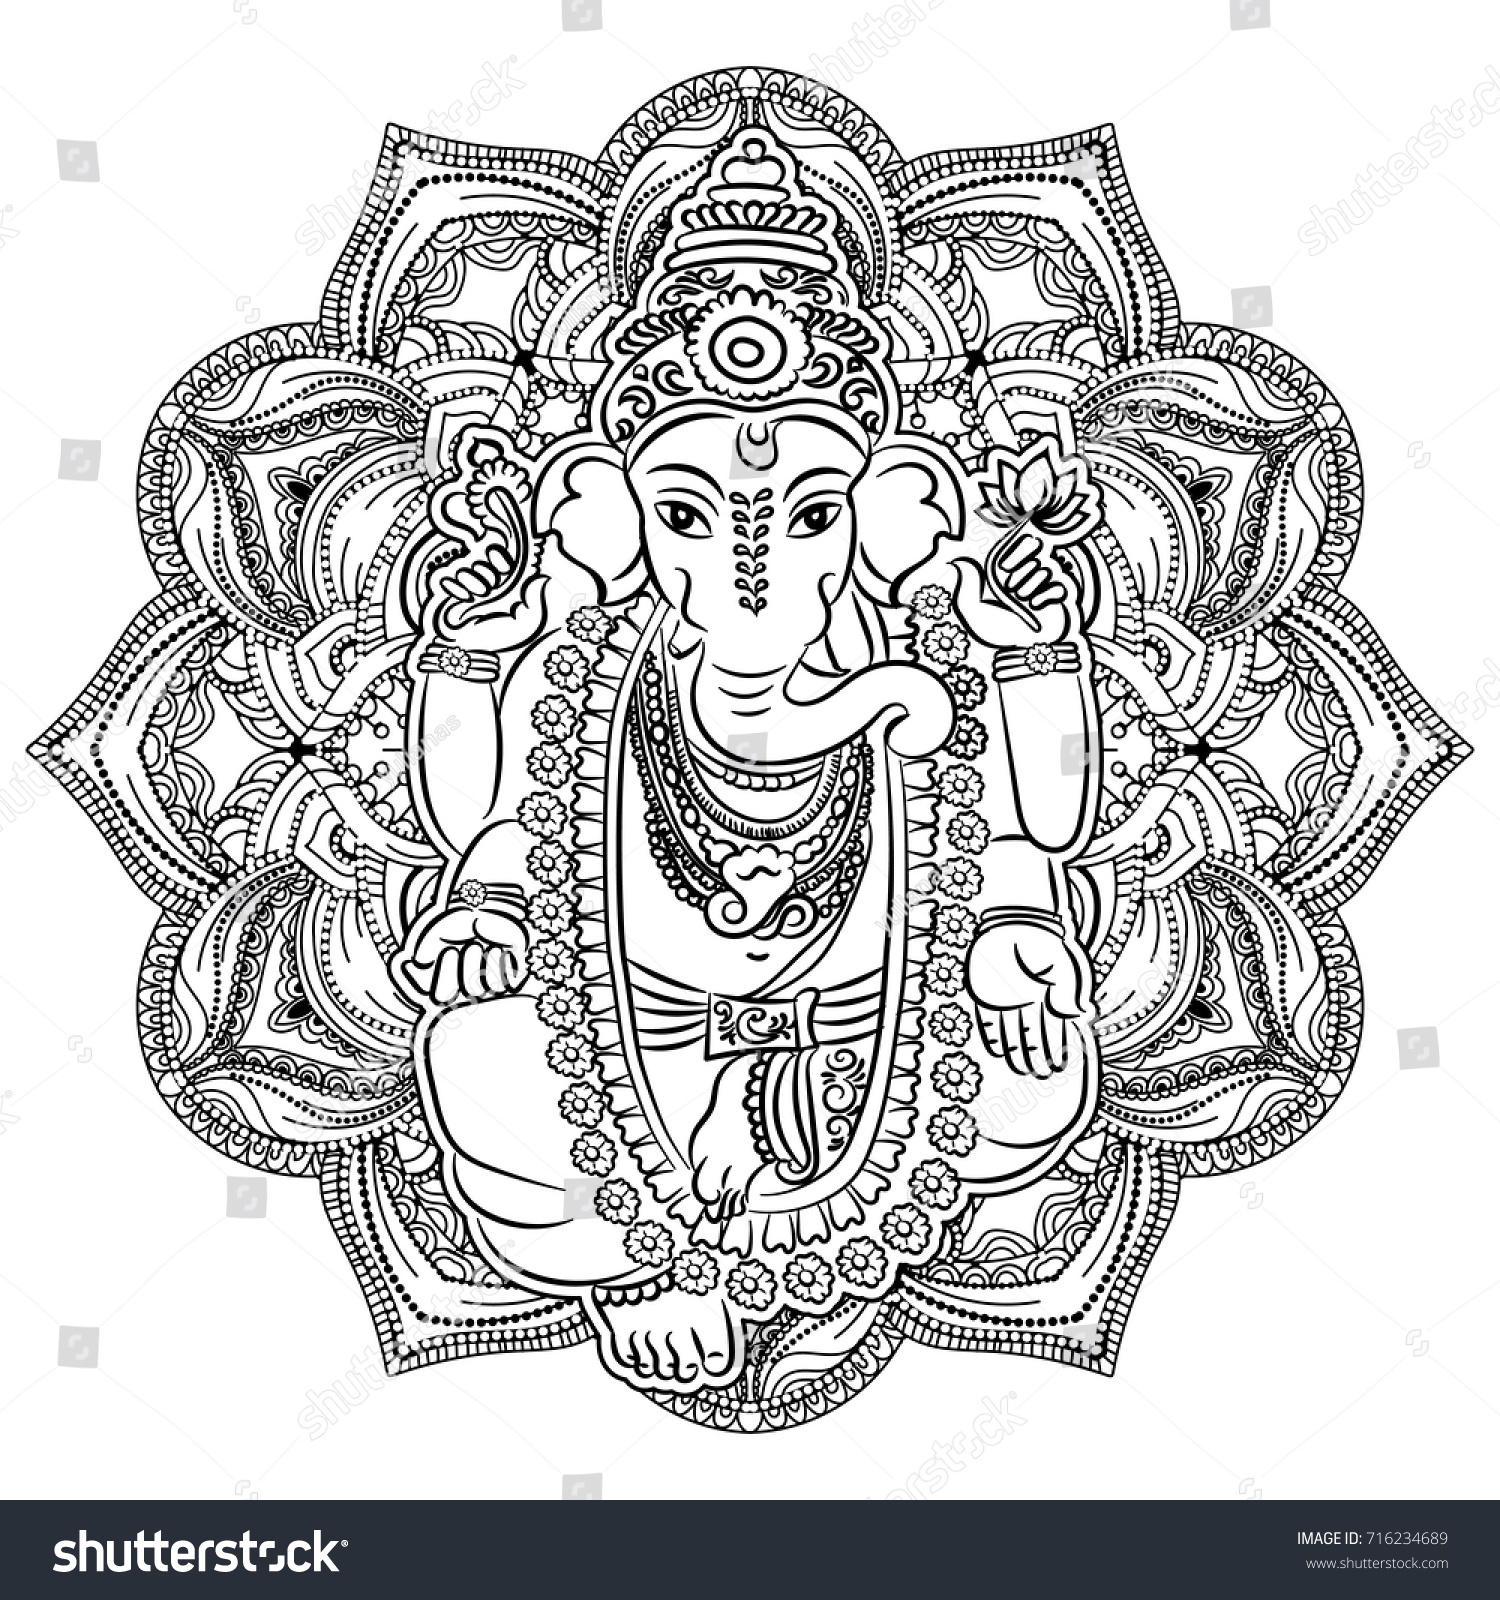 Ganesha On Ornate Mandala Pattern Background Stock Vector 716234689 ...